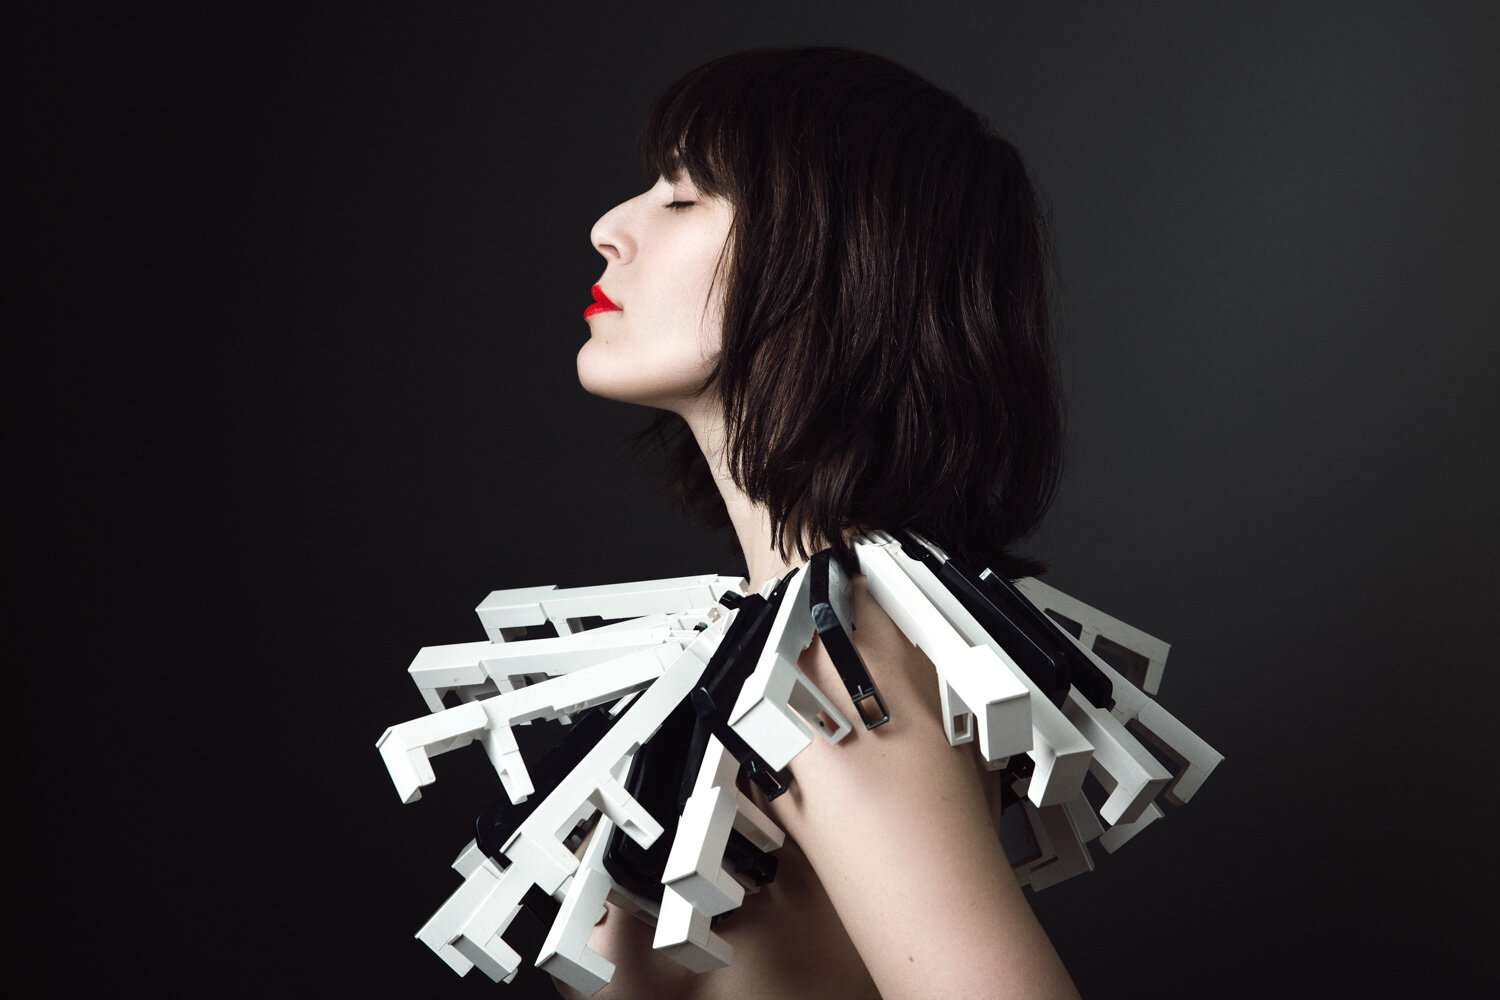 dark studio portrait of musician Janna Pelle wearing piano key necklace by creative portrait photographer Hanna Agar